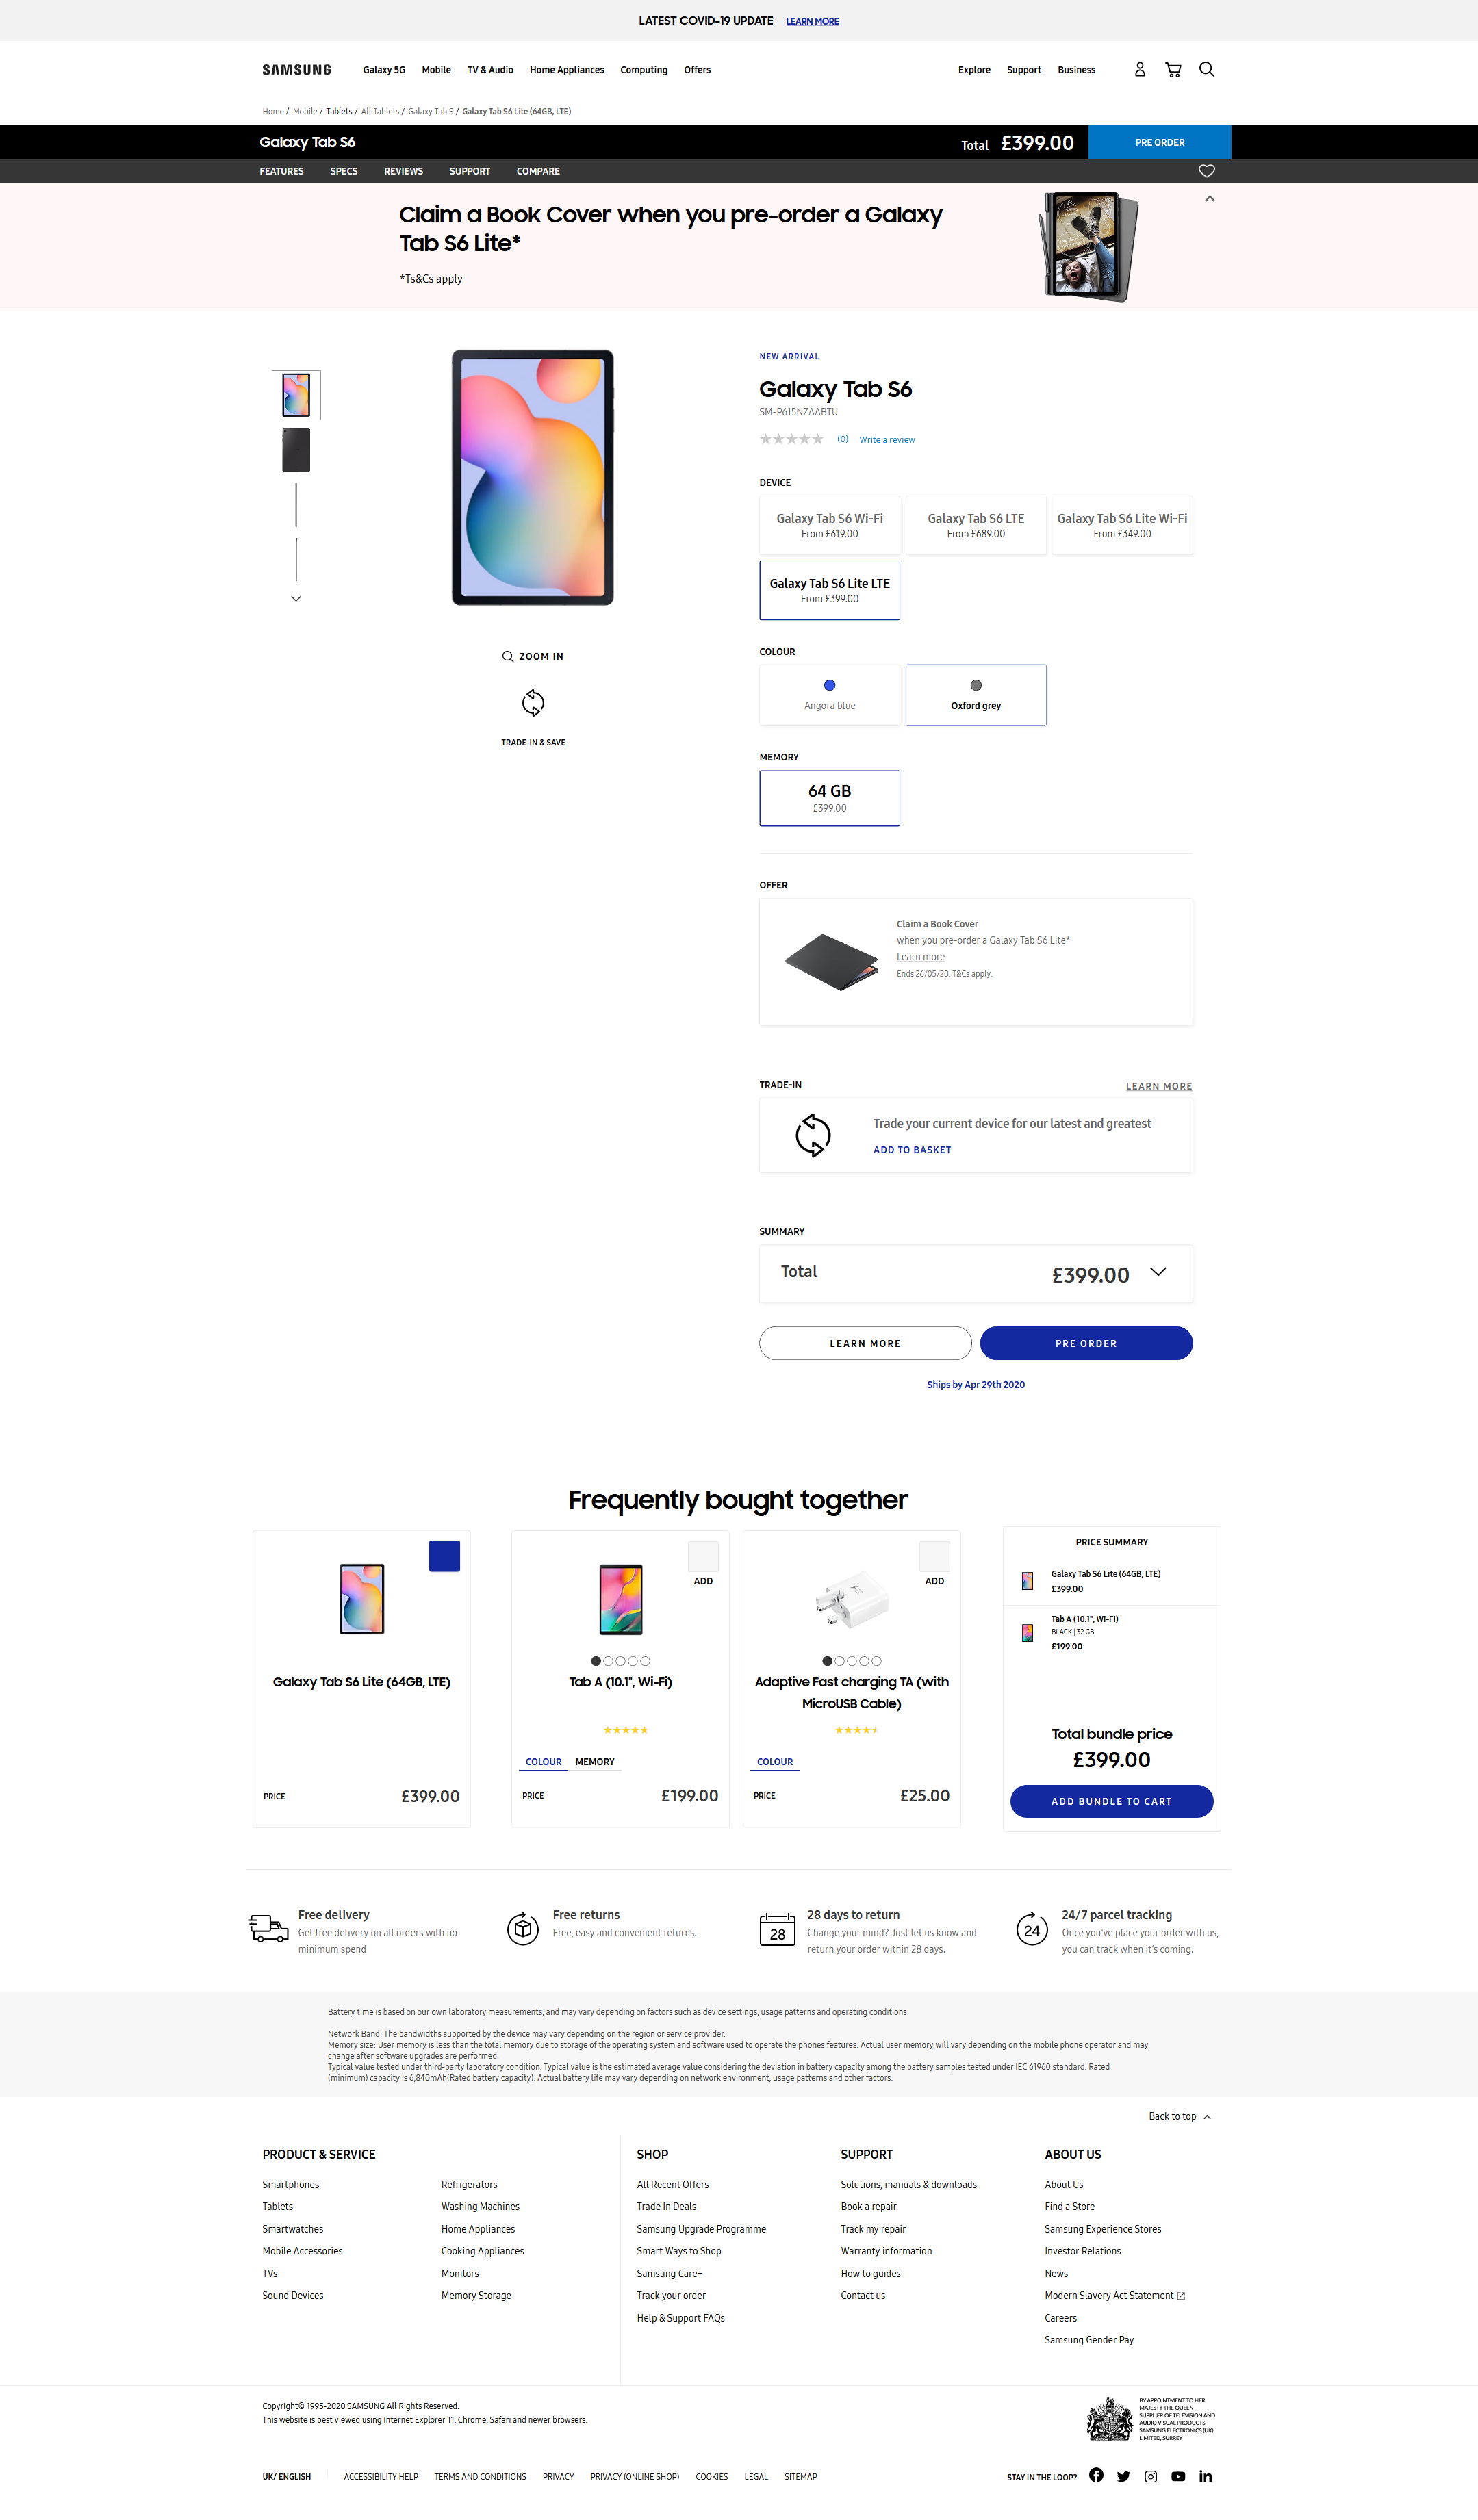 Screenshot_2020-04-17 Galaxy Tab S6 Lite, Grey 64GB View Specs Samsung UK.png